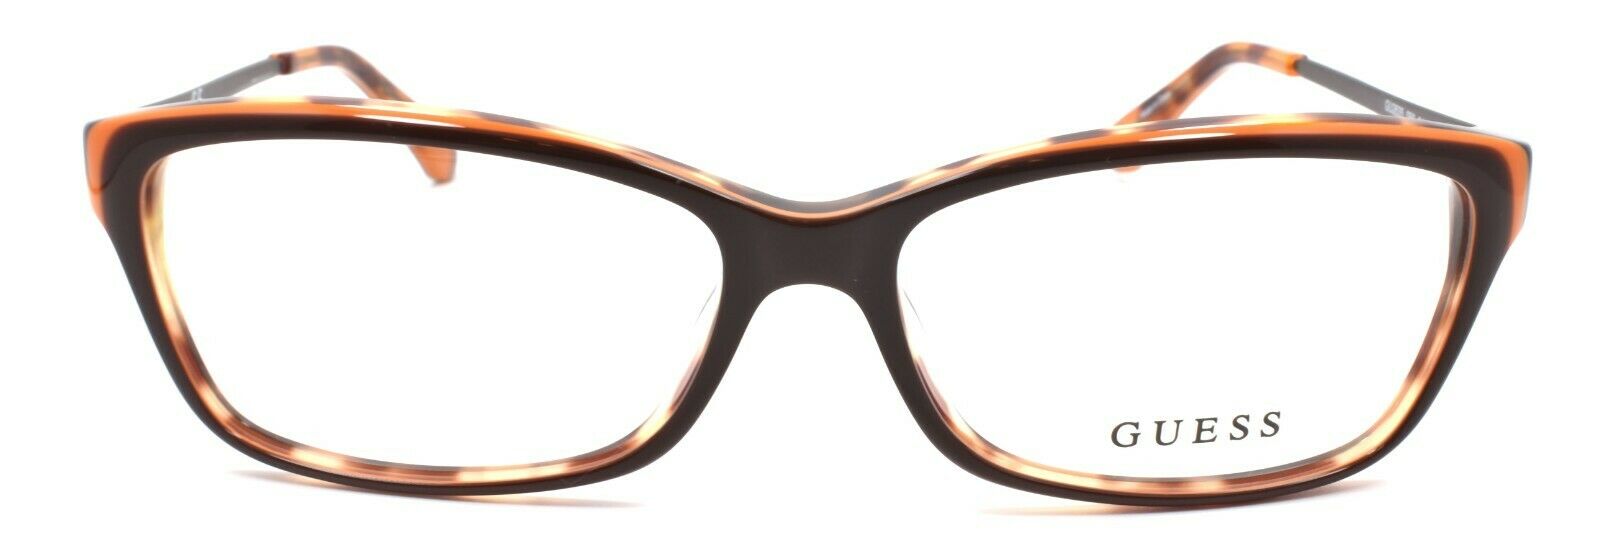 2-GUESS GU2635 050 Women's Eyeglasses Frames 54-14-135 Dark Brown / Orange + CASE-664689876990-IKSpecs